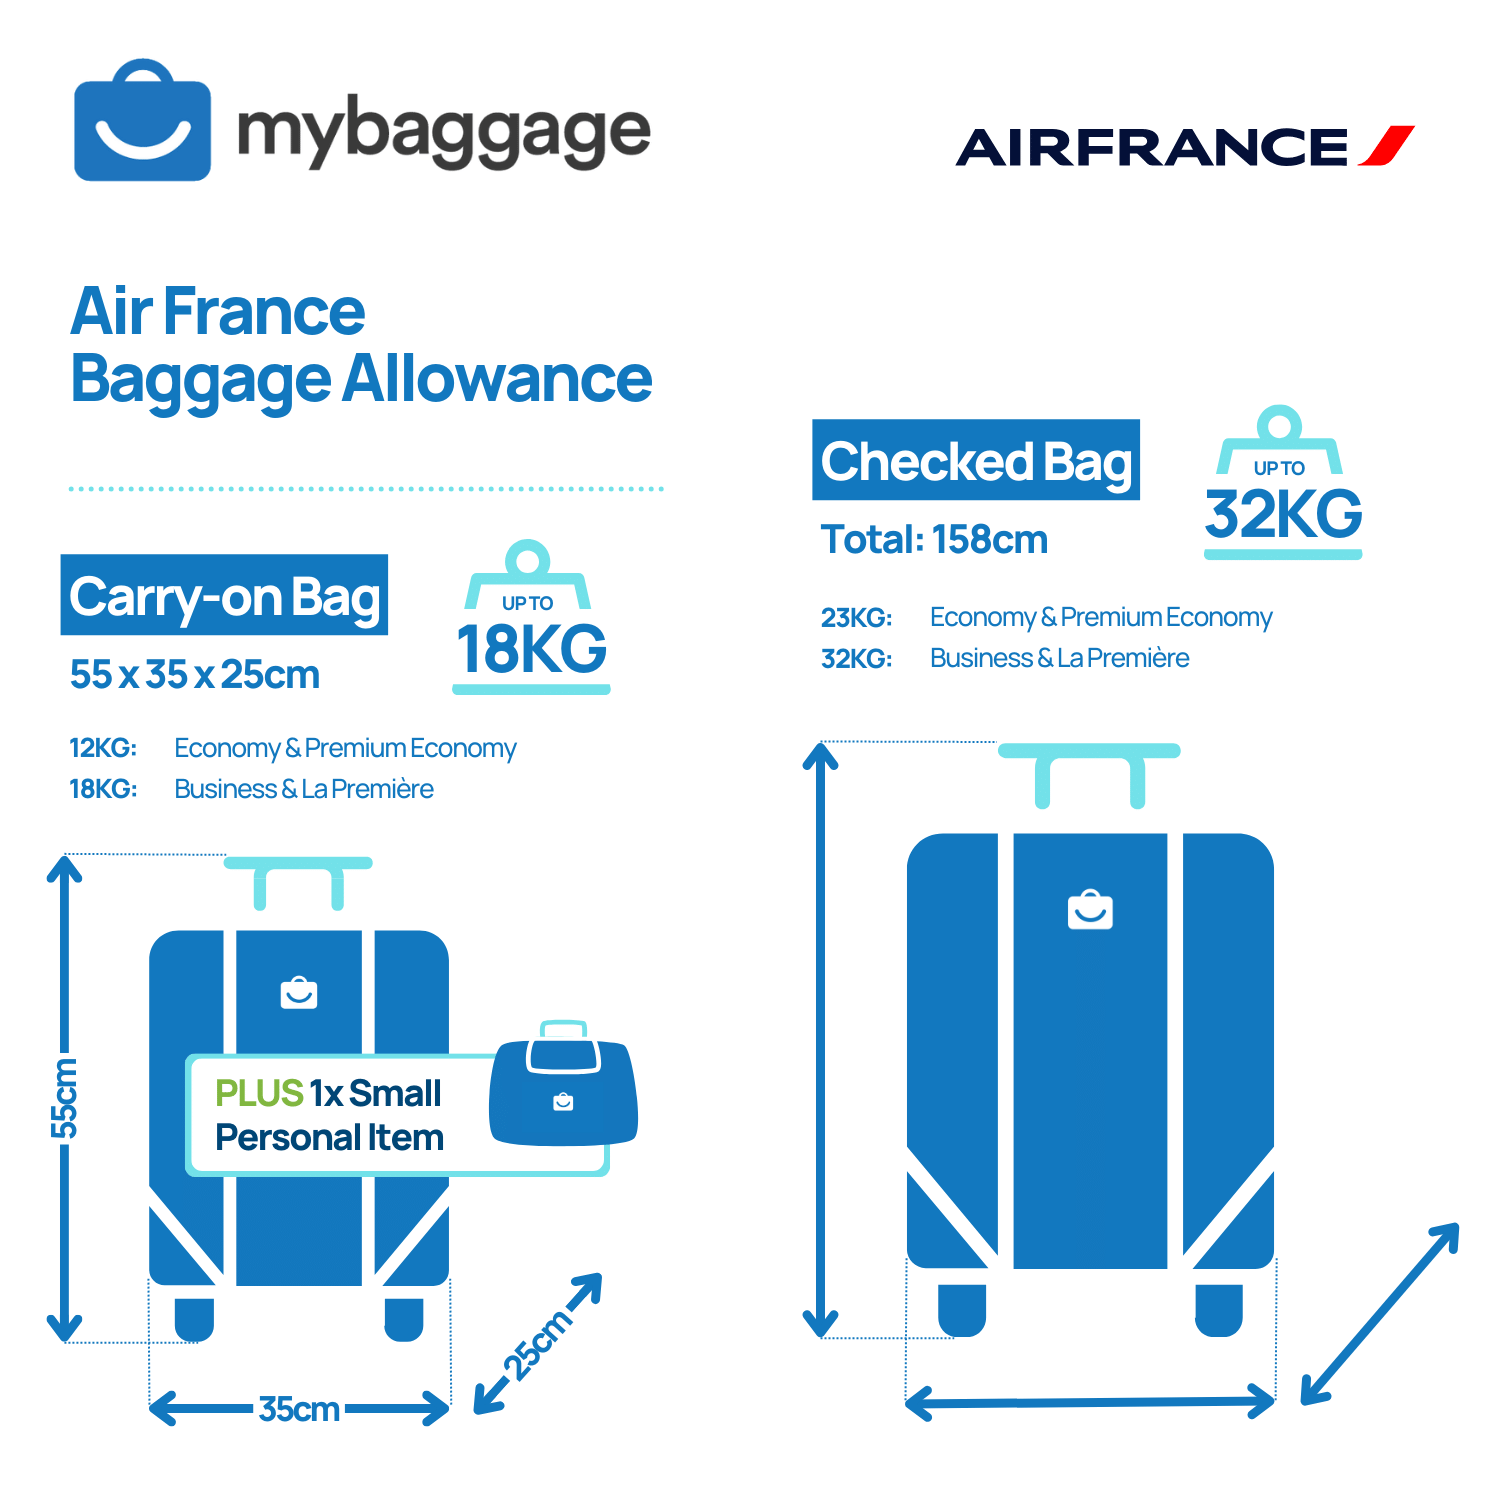 Air France Baggage Allowance